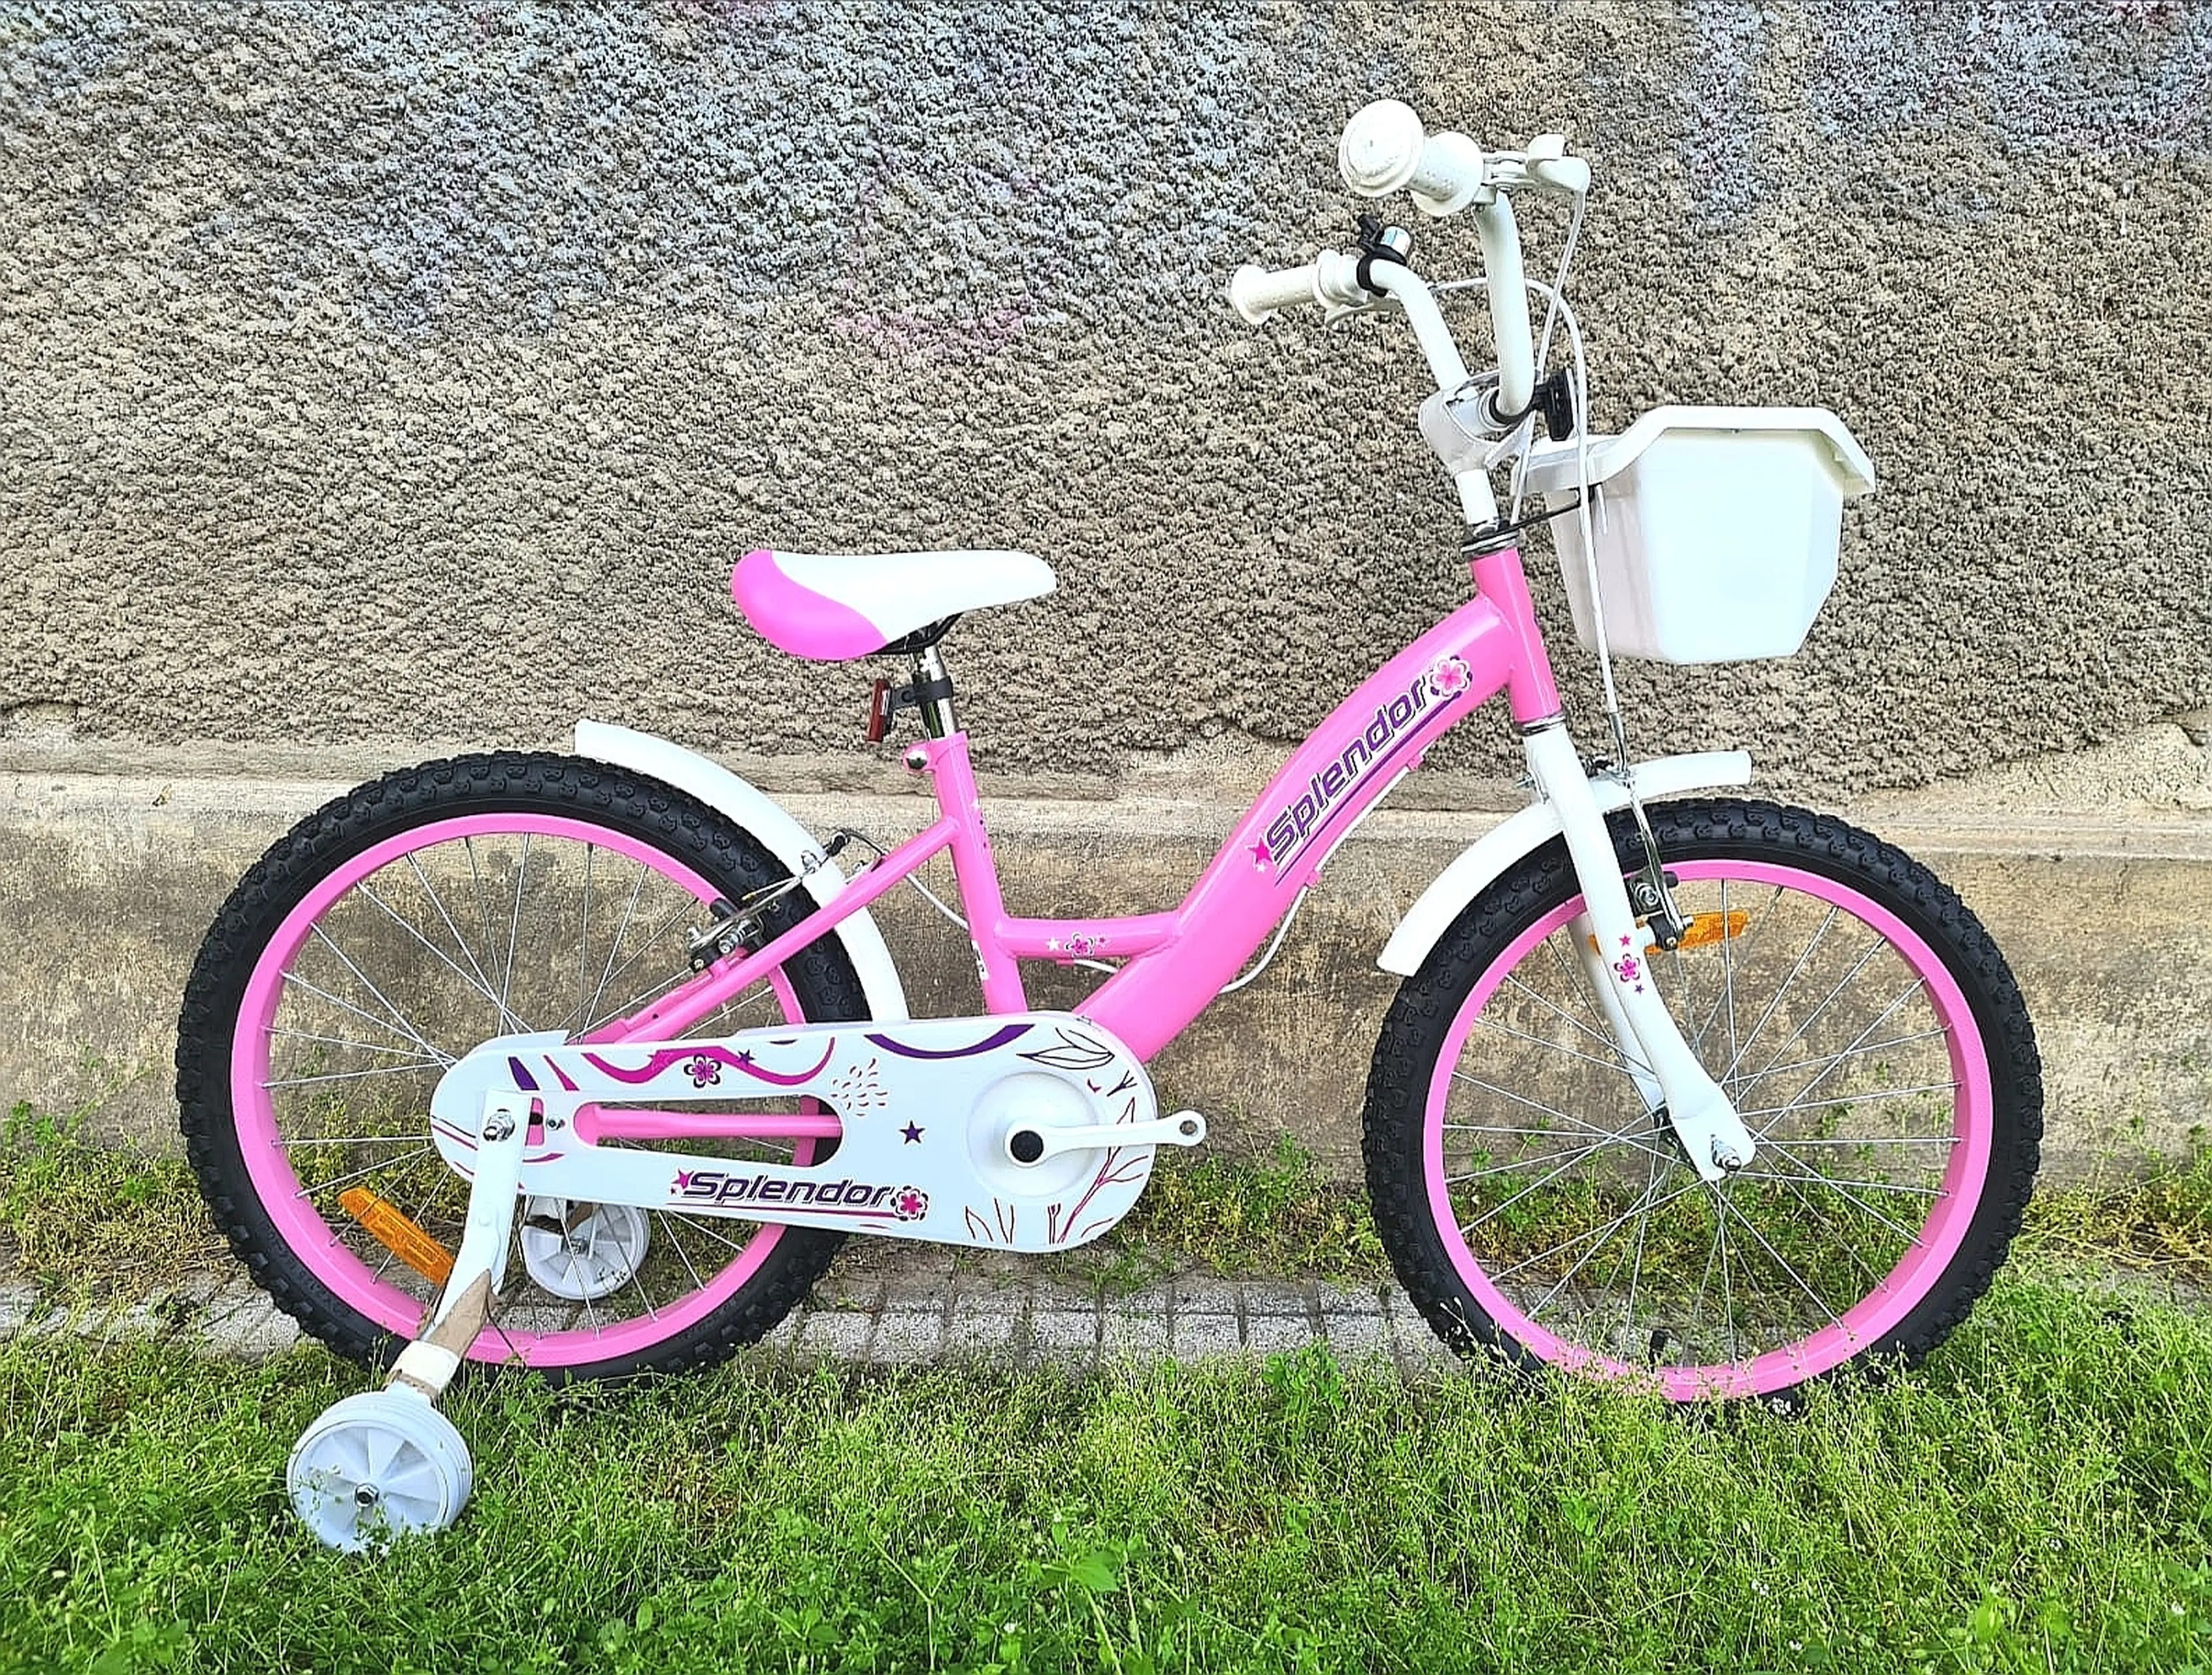 2. Bicicleta Splendor 20" pentru copii model 2021